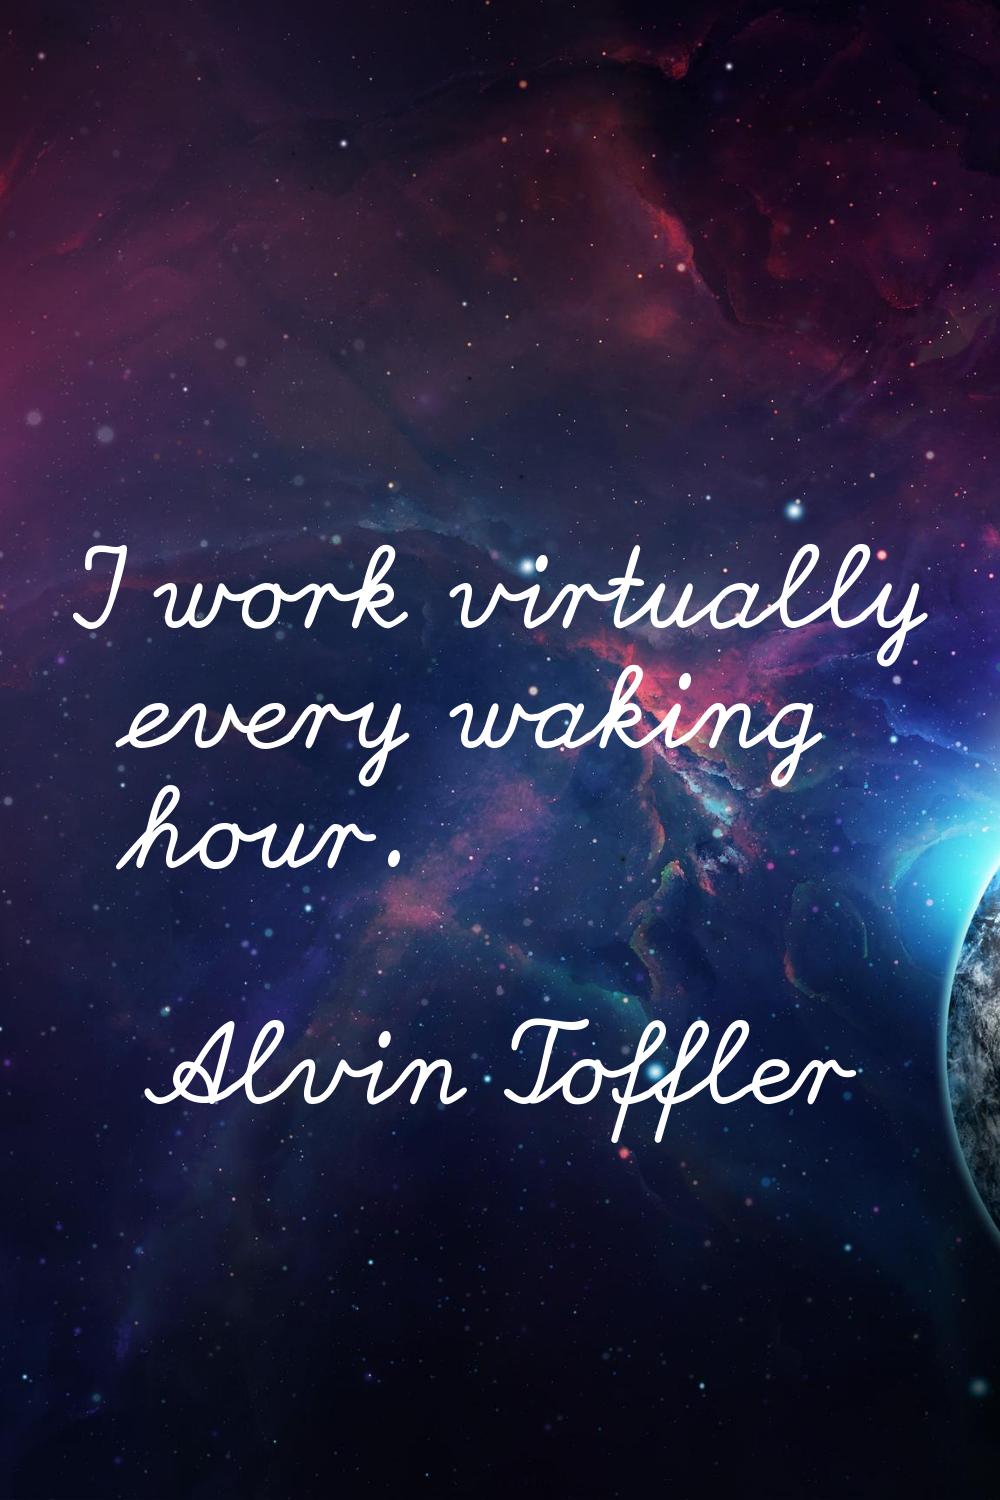 I work virtually every waking hour.